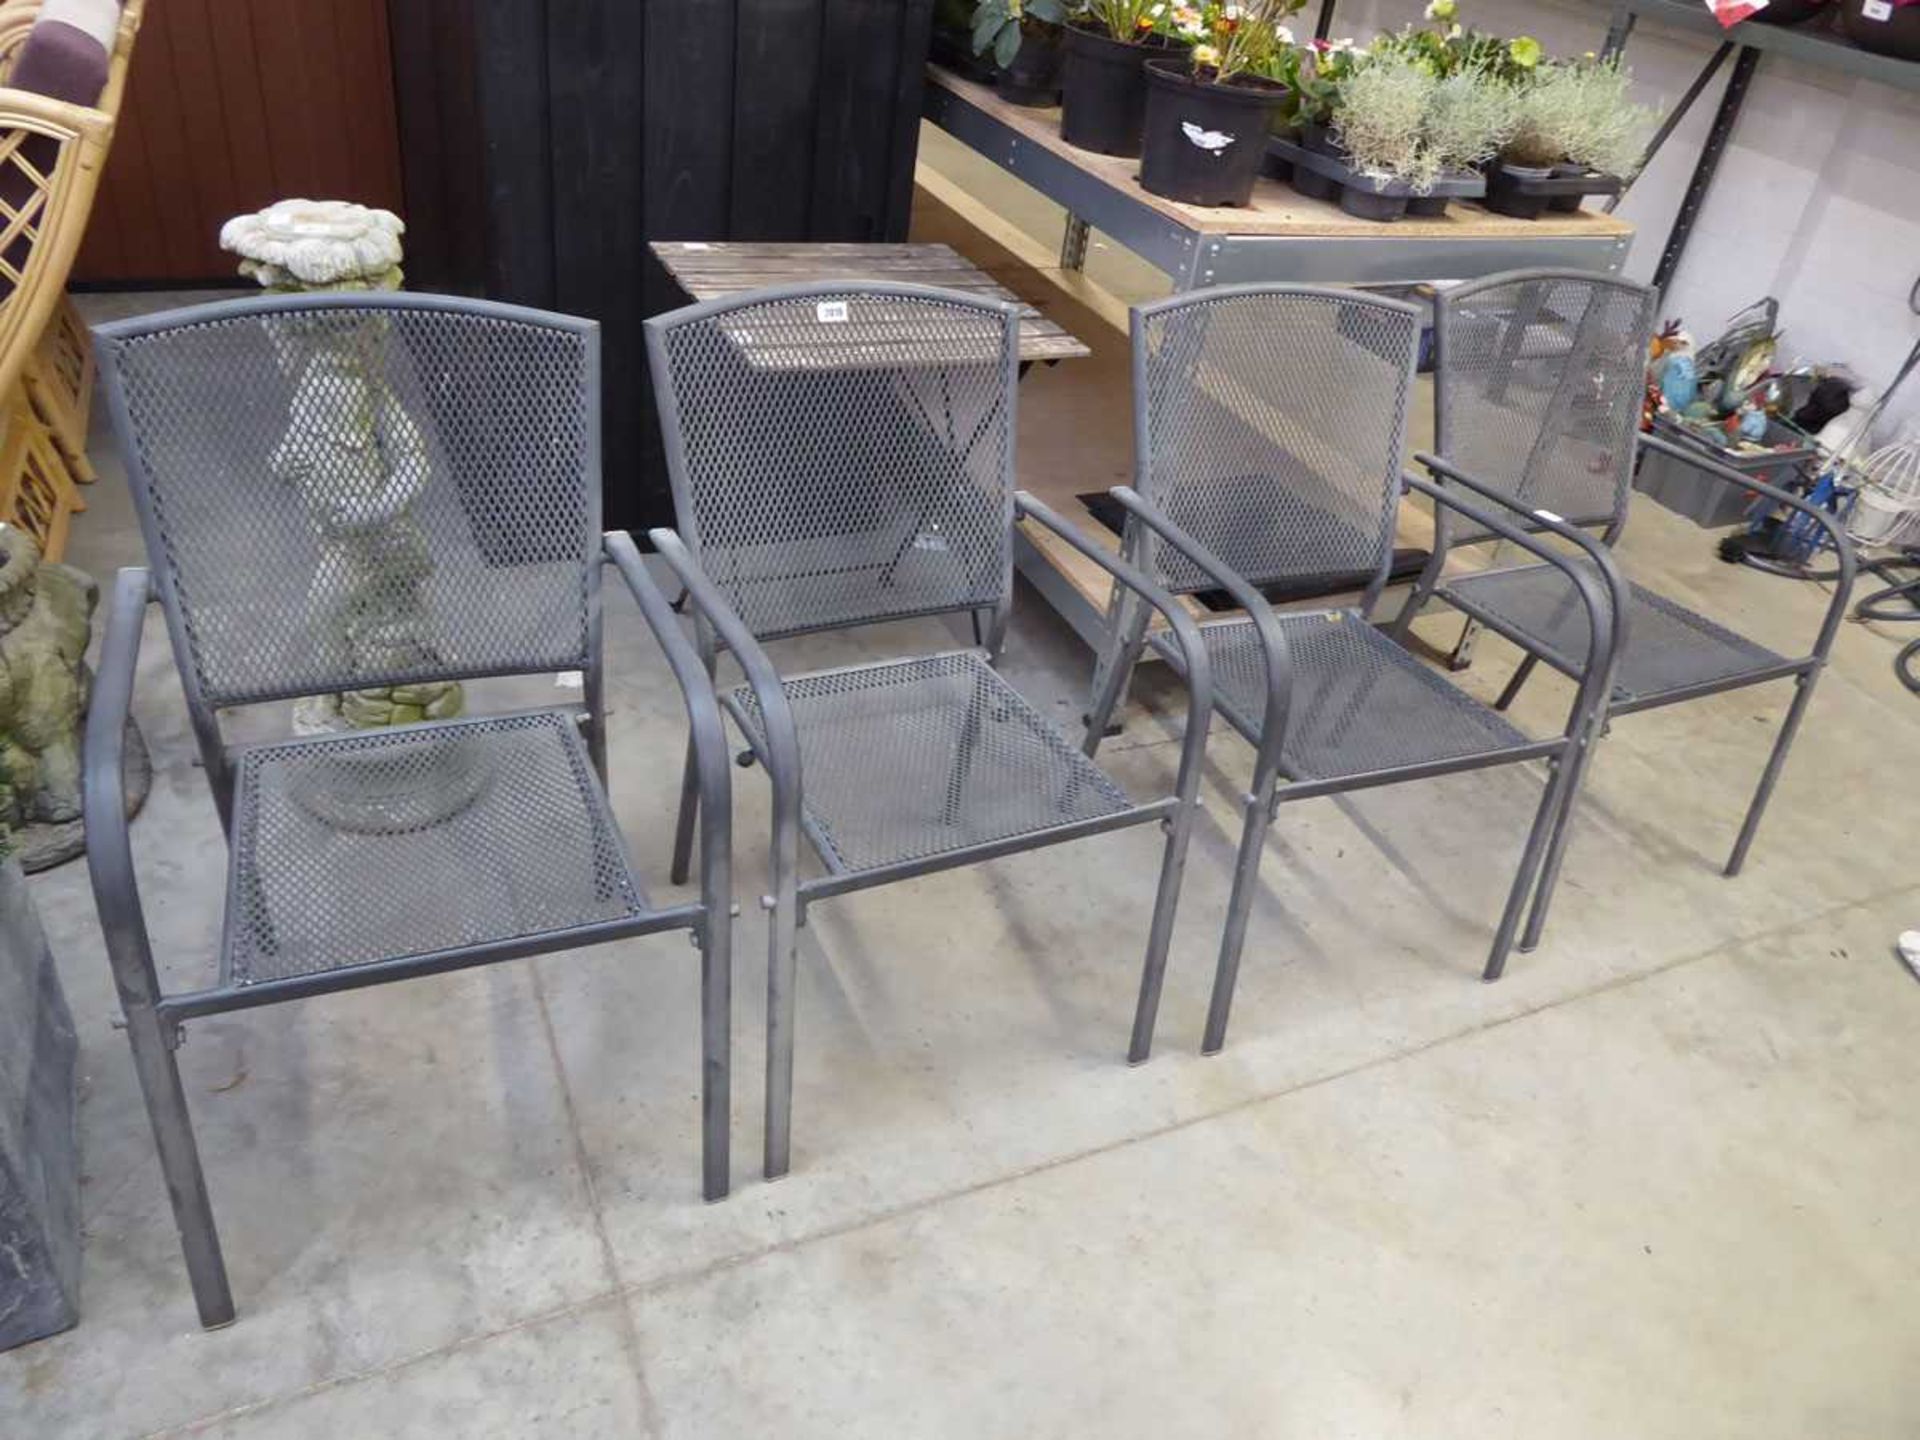 4 metal mesh garden chairs